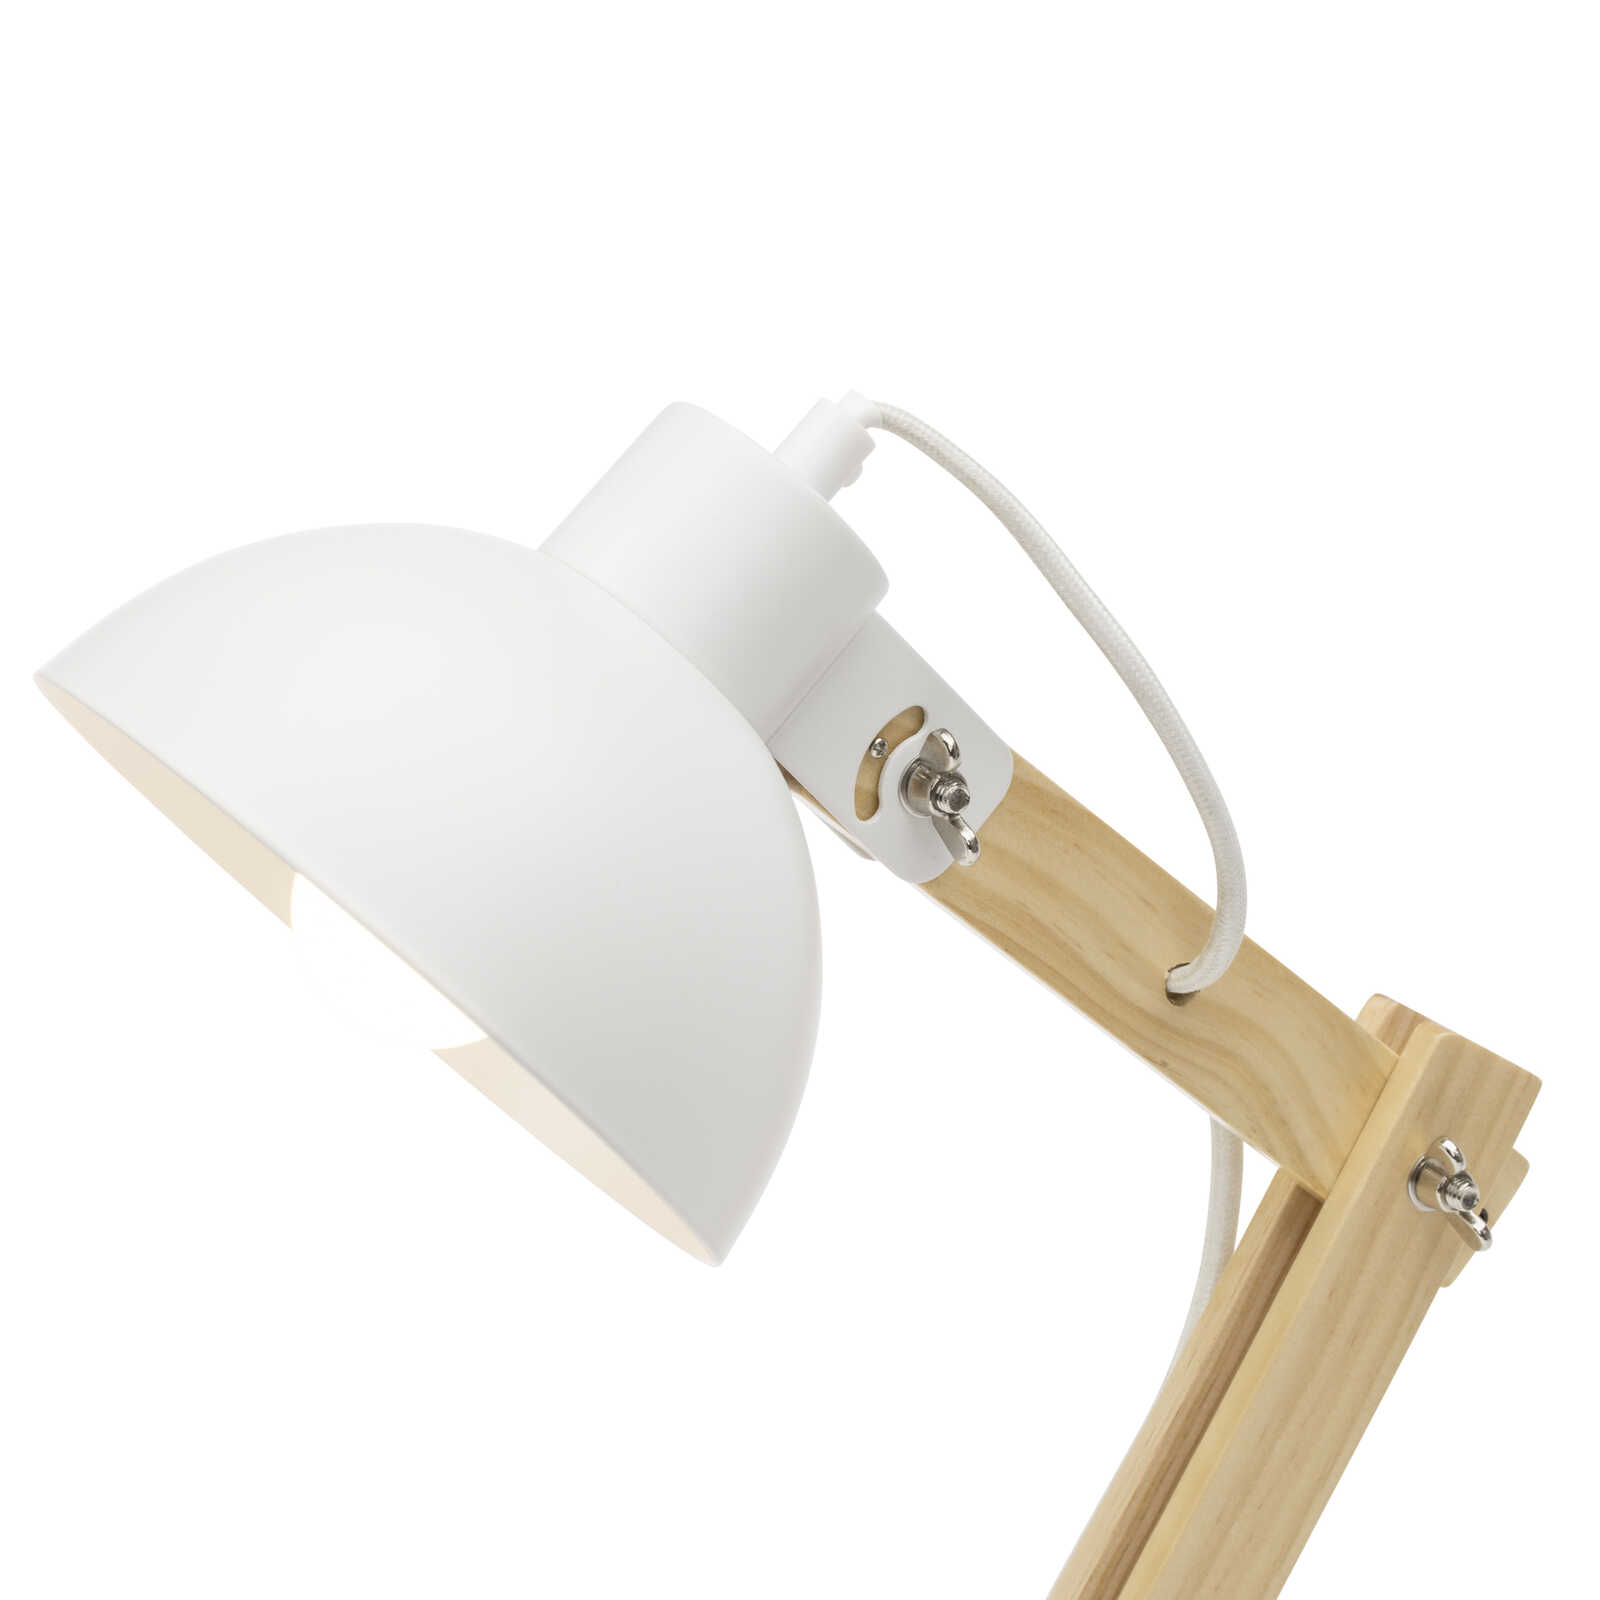             Lámpara de mesa de madera - Lisa 1 - Blanco
        